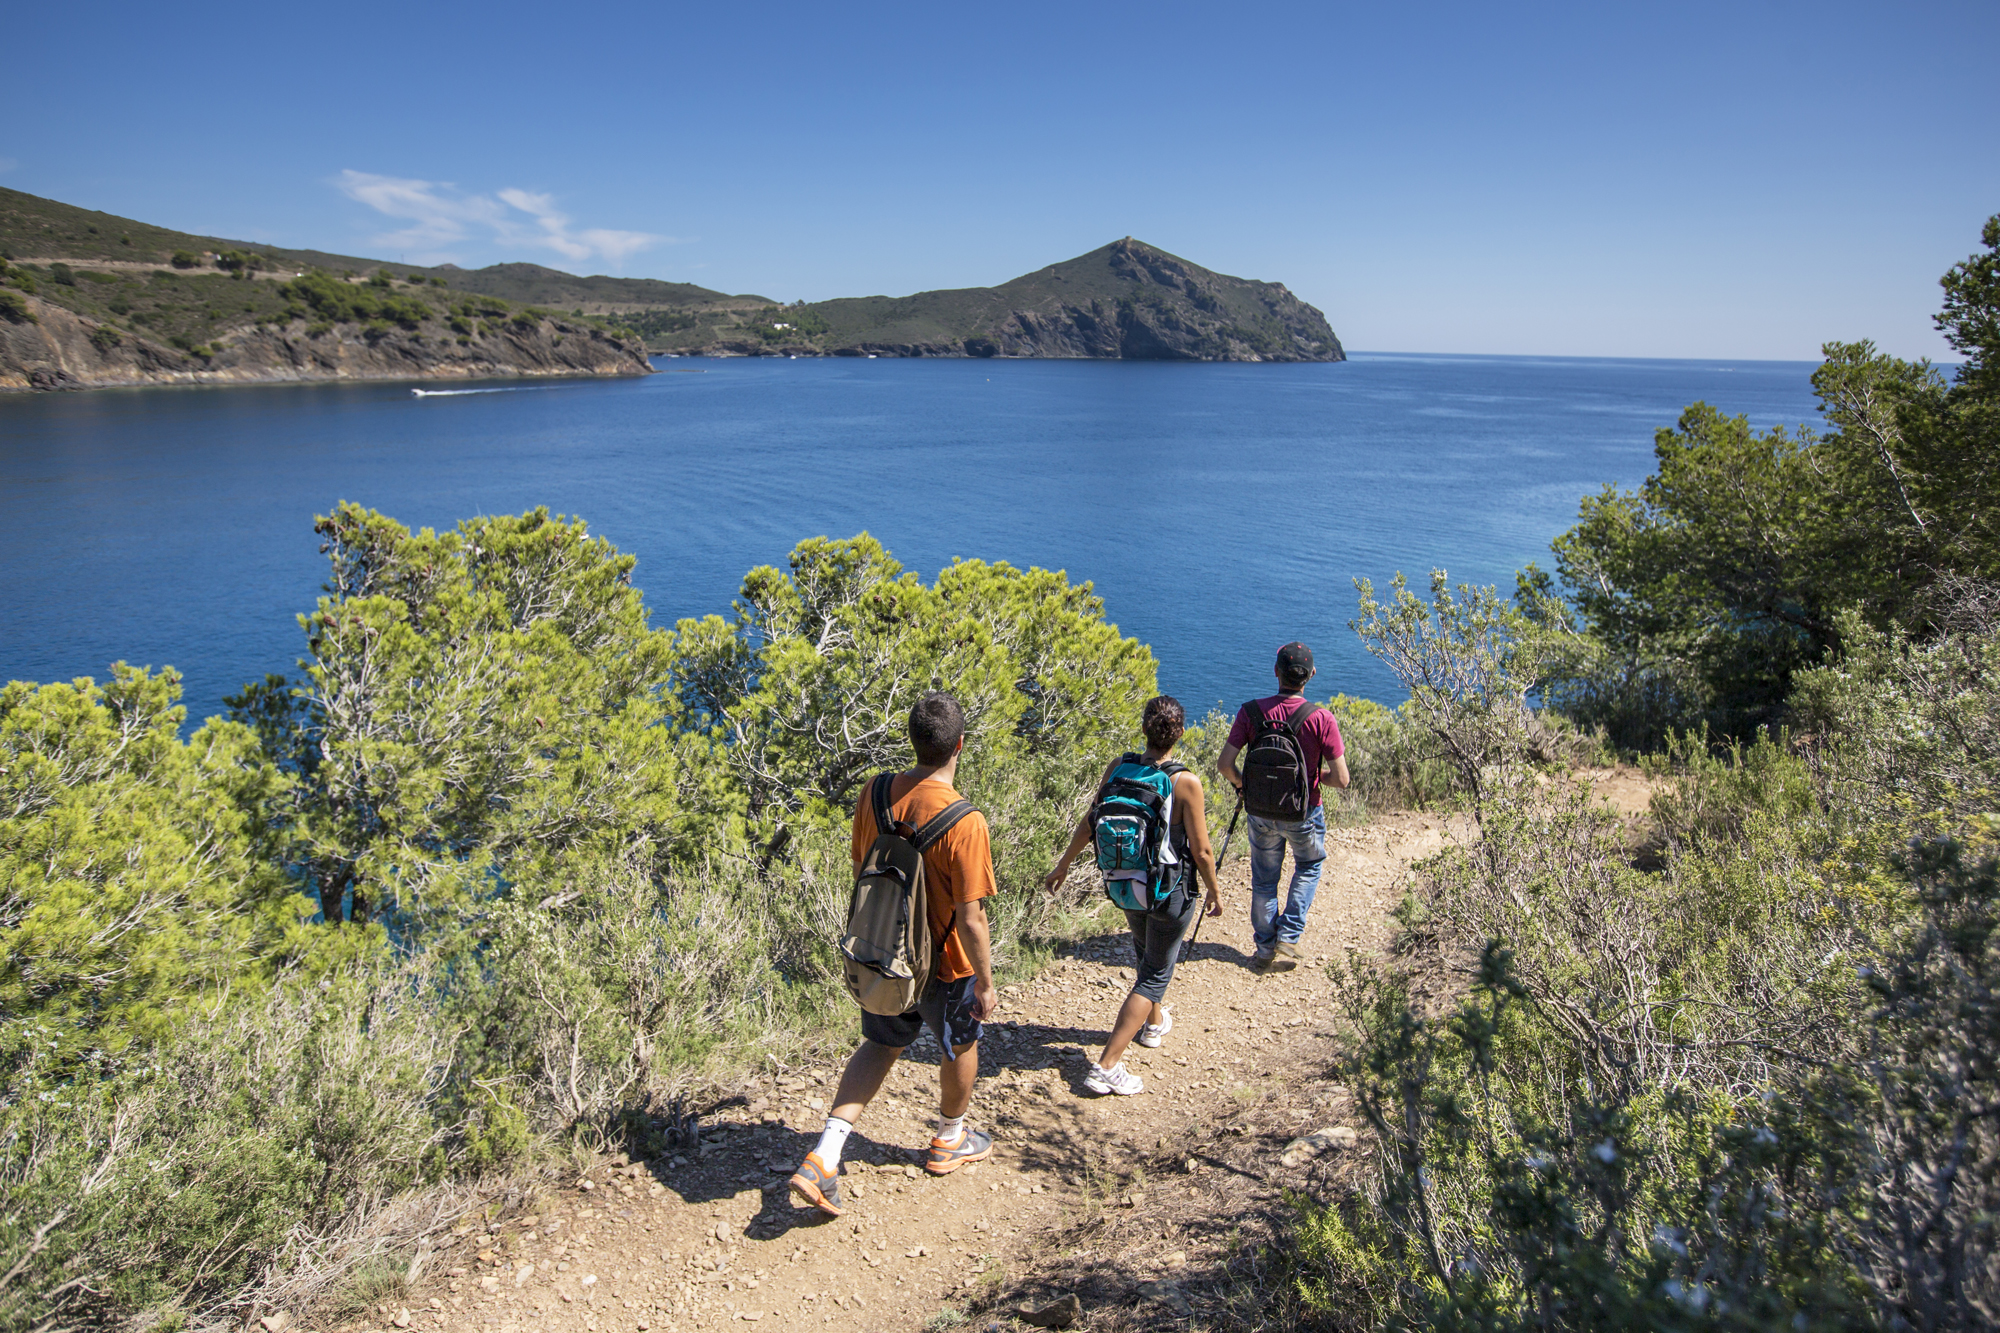 Hiking holiday along the Spanish Costa Brava coastal path, also known as the GR92 Cami de Ronda